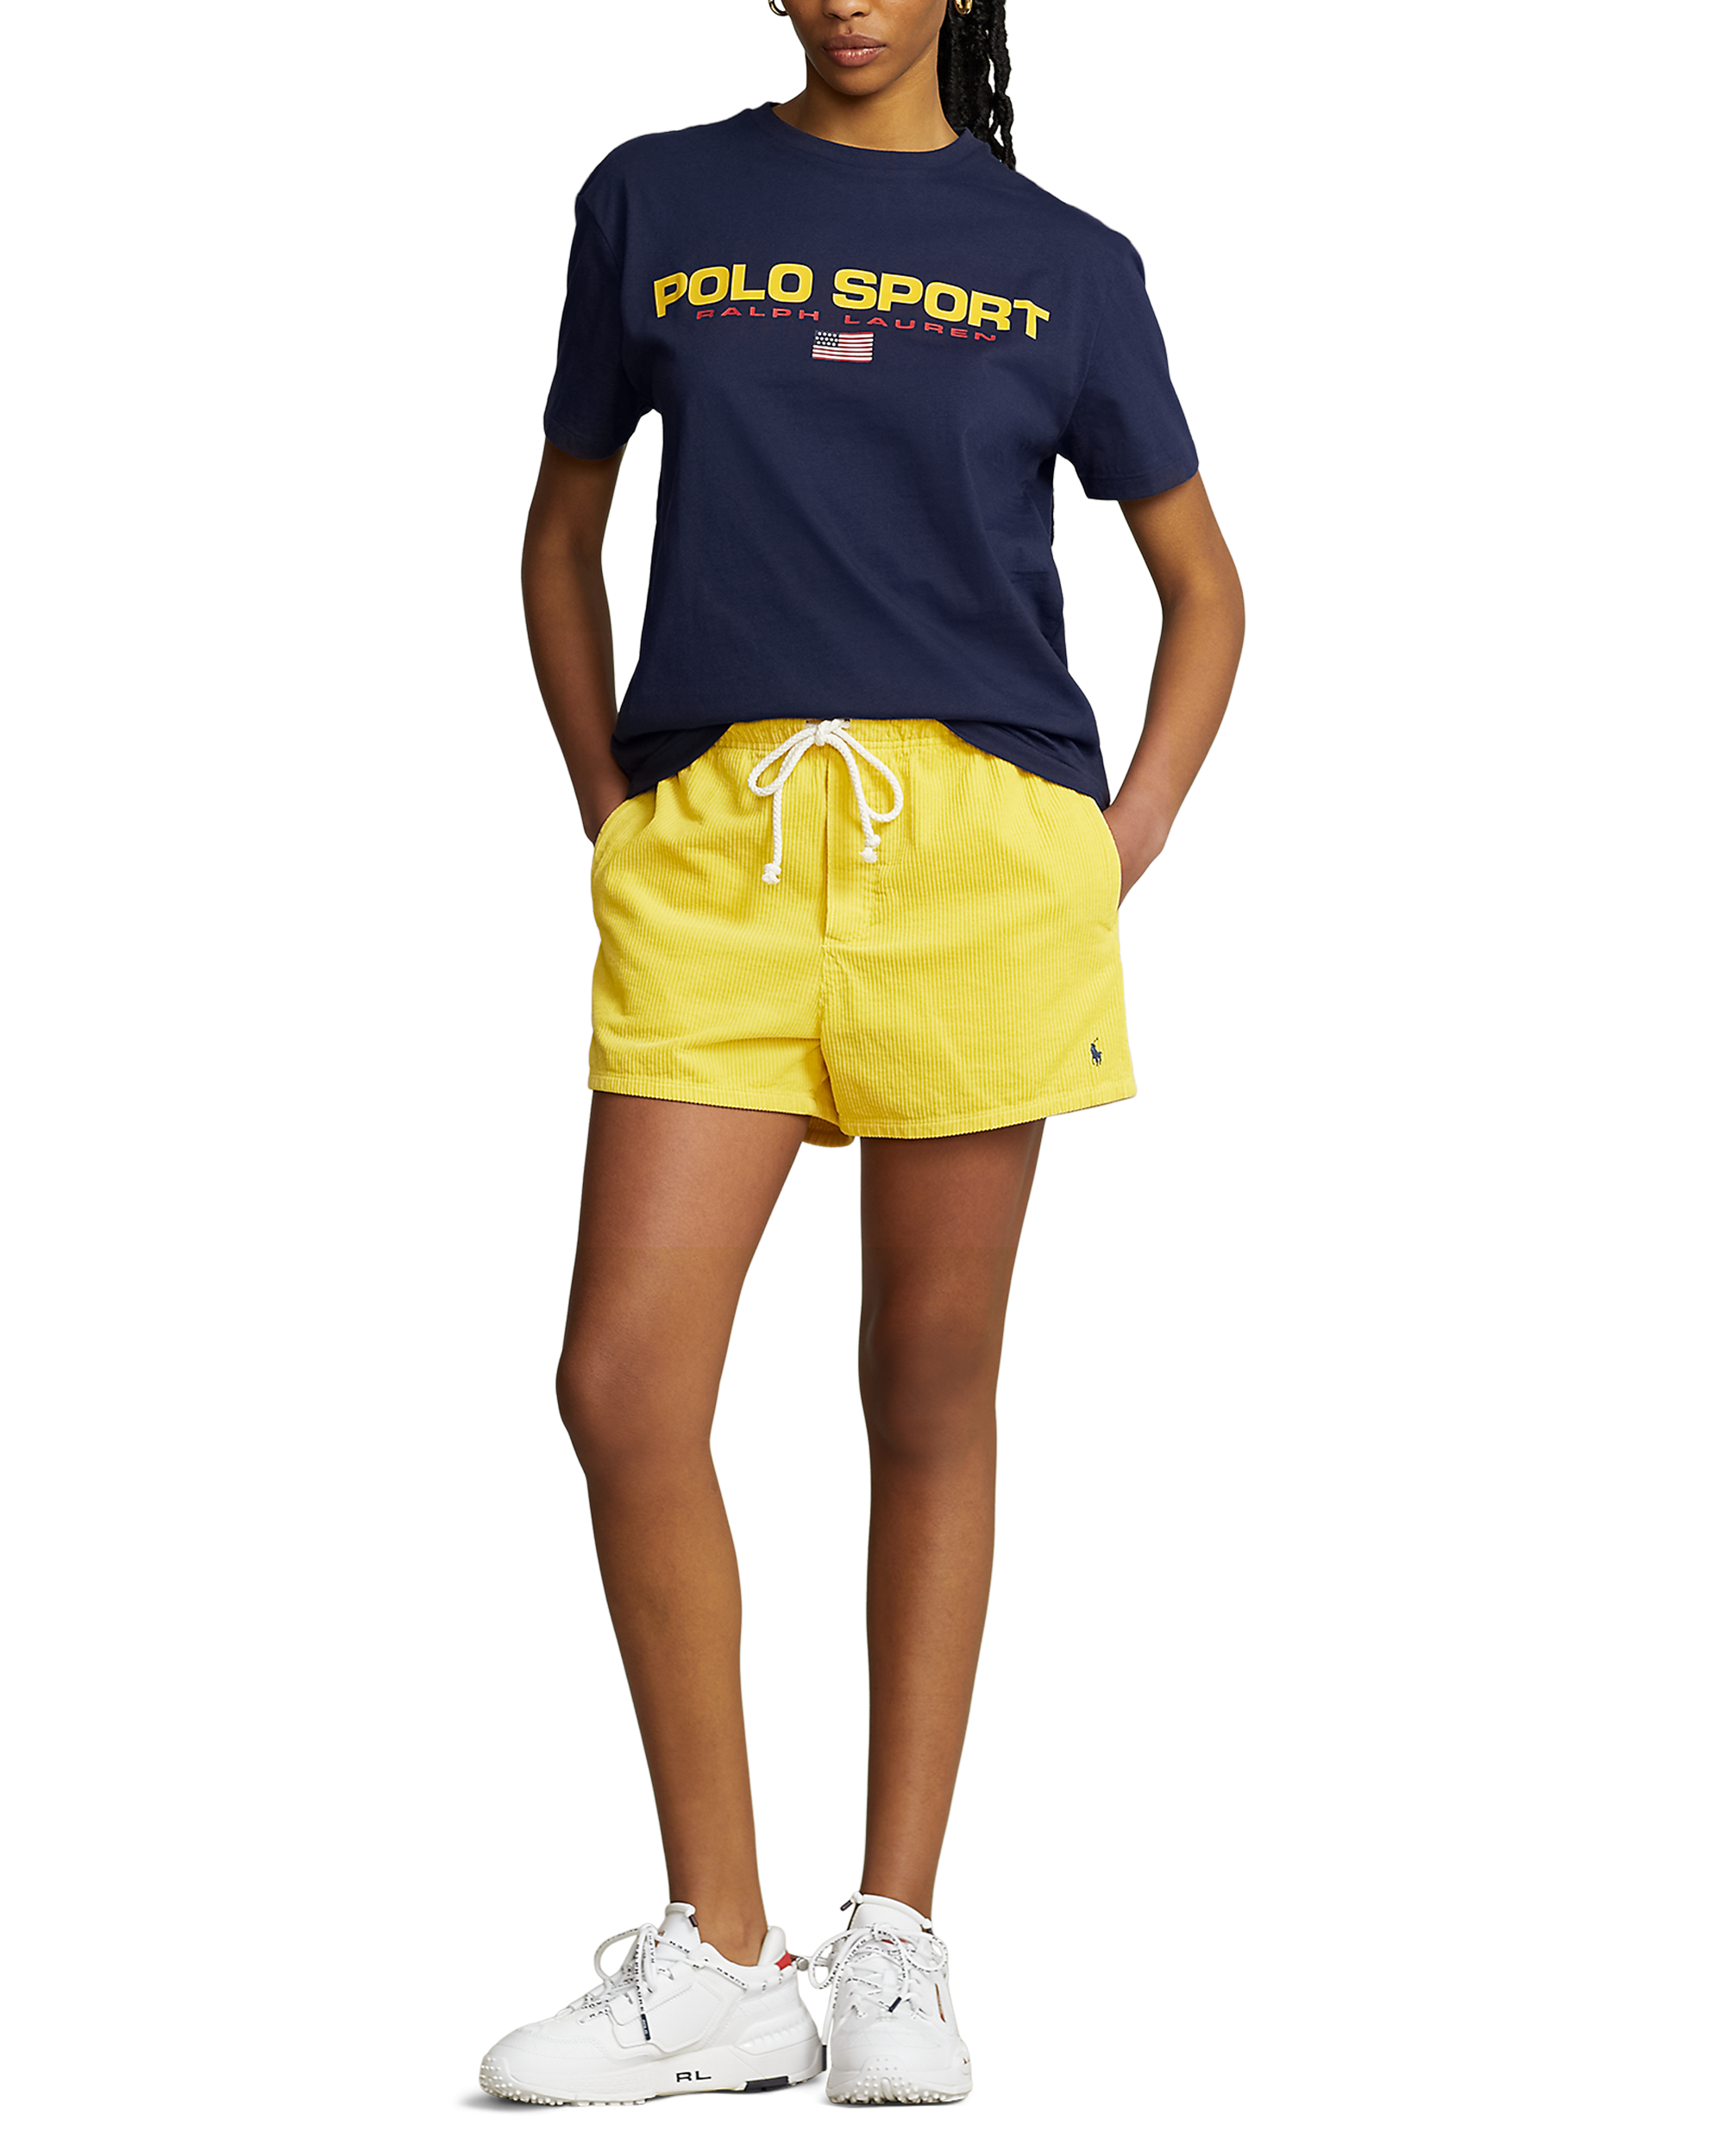 Polo Sport T-Shirt - Navy